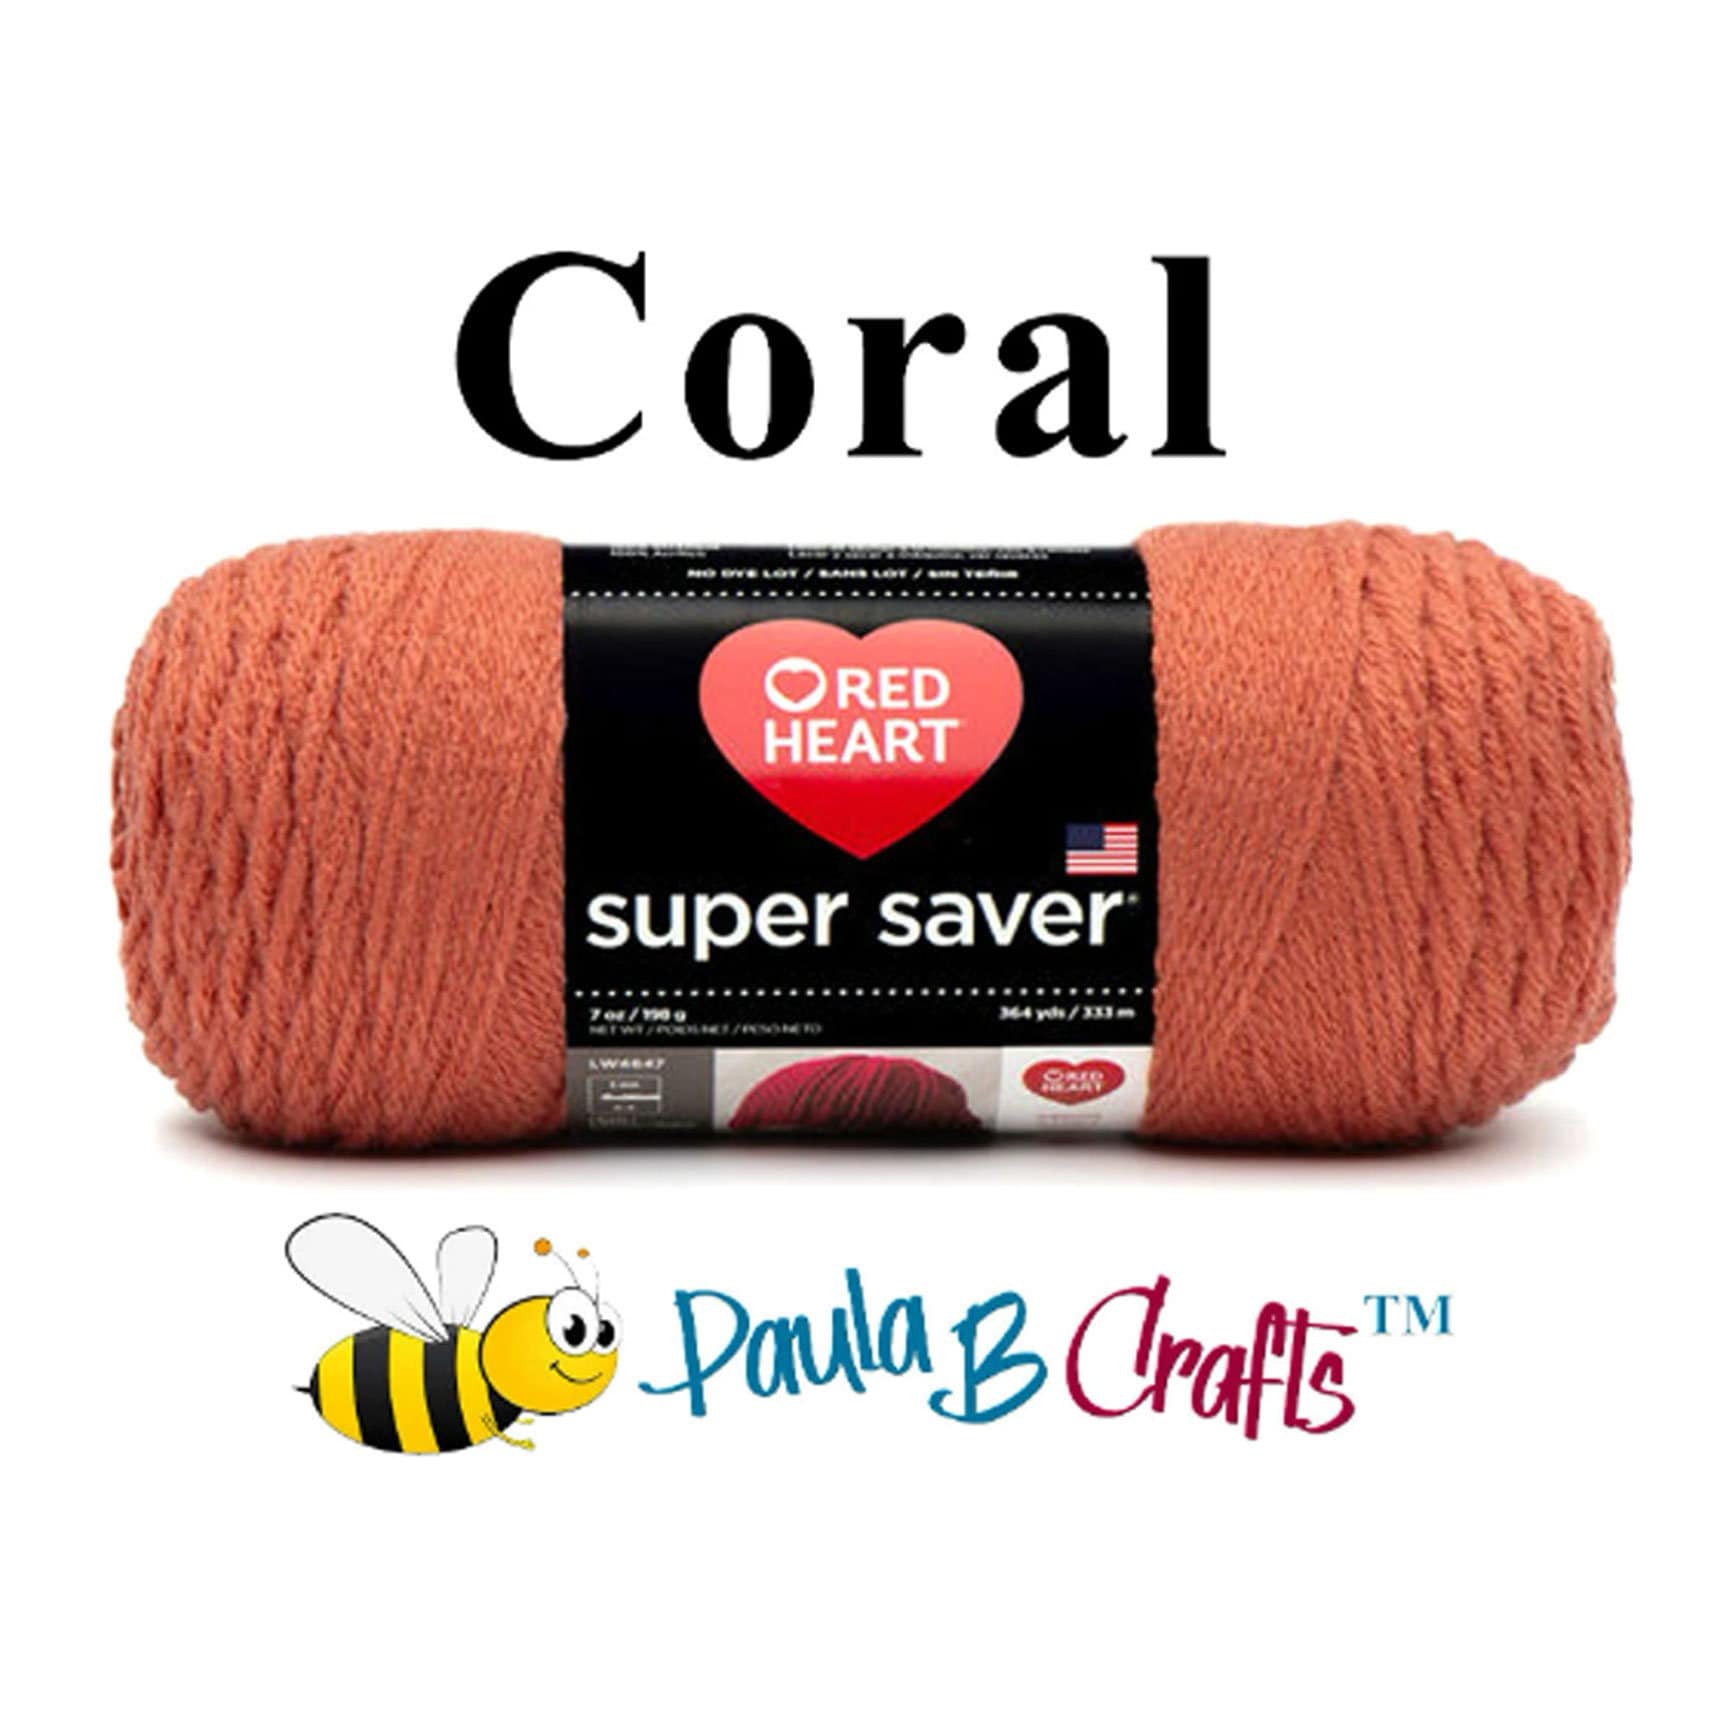 Red Heart Super Saver Jumbo Soft White Yarn - 2 Pack of 396g/14oz - Acrylic  - 4 Medium (Worsted) - 744 Yards - Knitting/Crochet